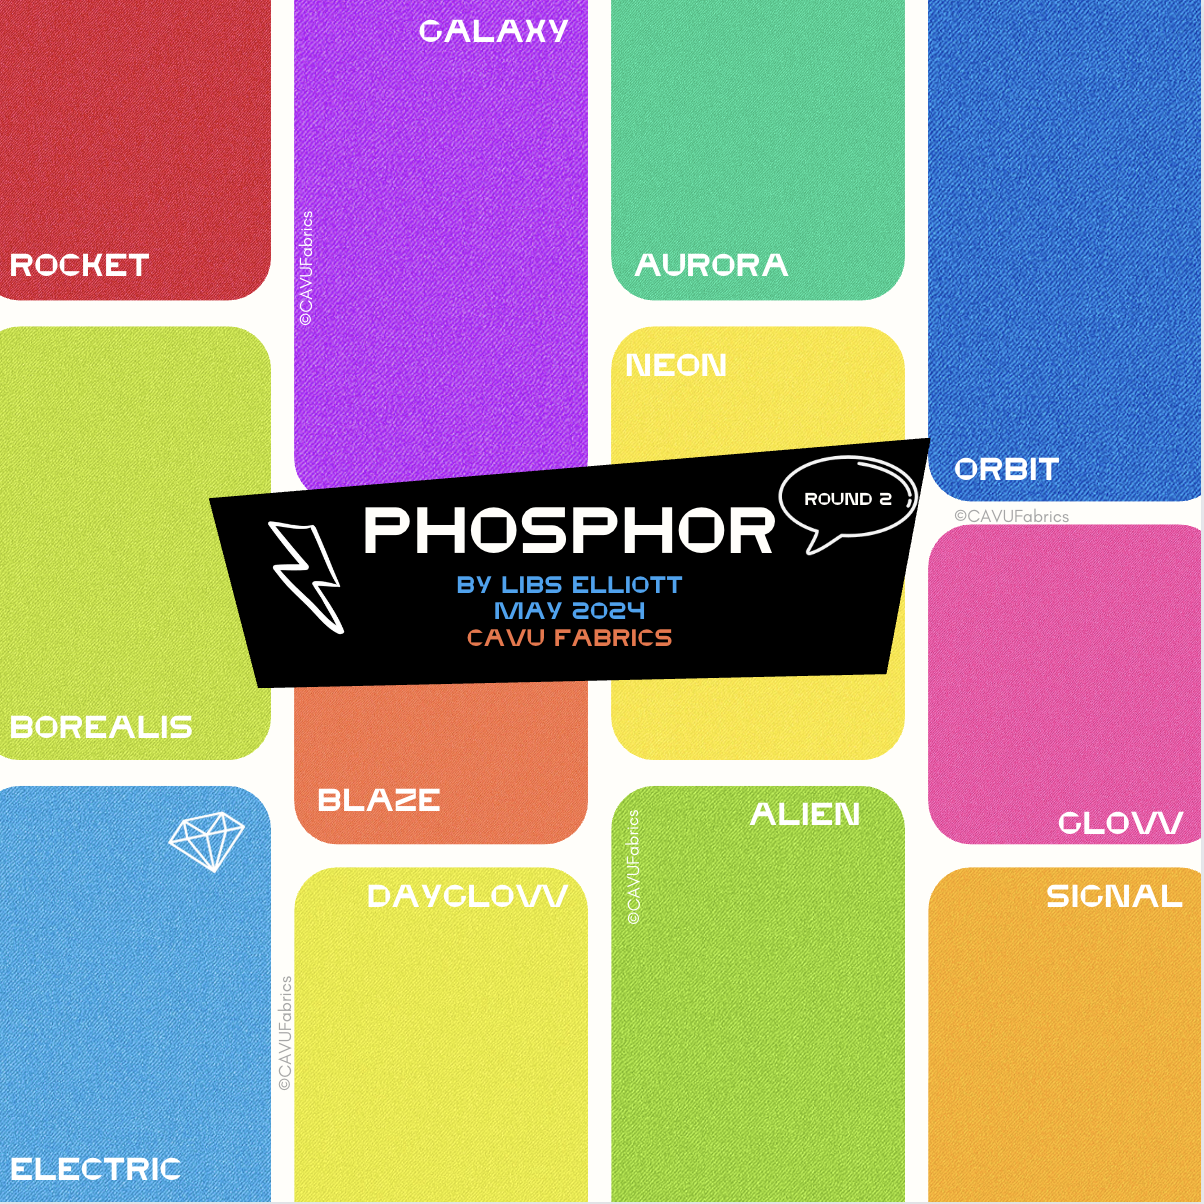 Rocket - Phosphor by Libs Elliott